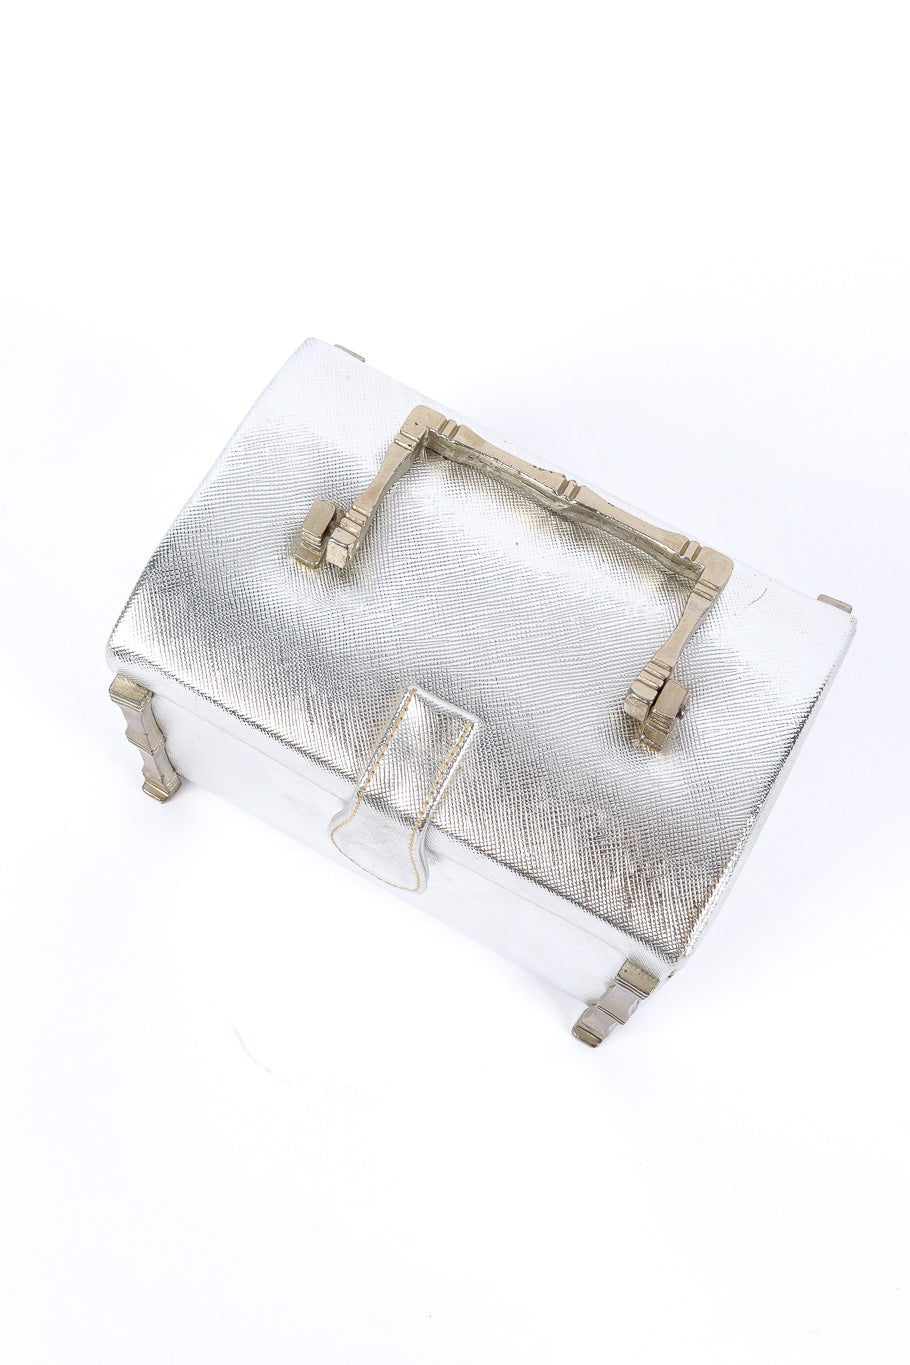 Lewis silver leather mini box bag top detail product shot @recessla